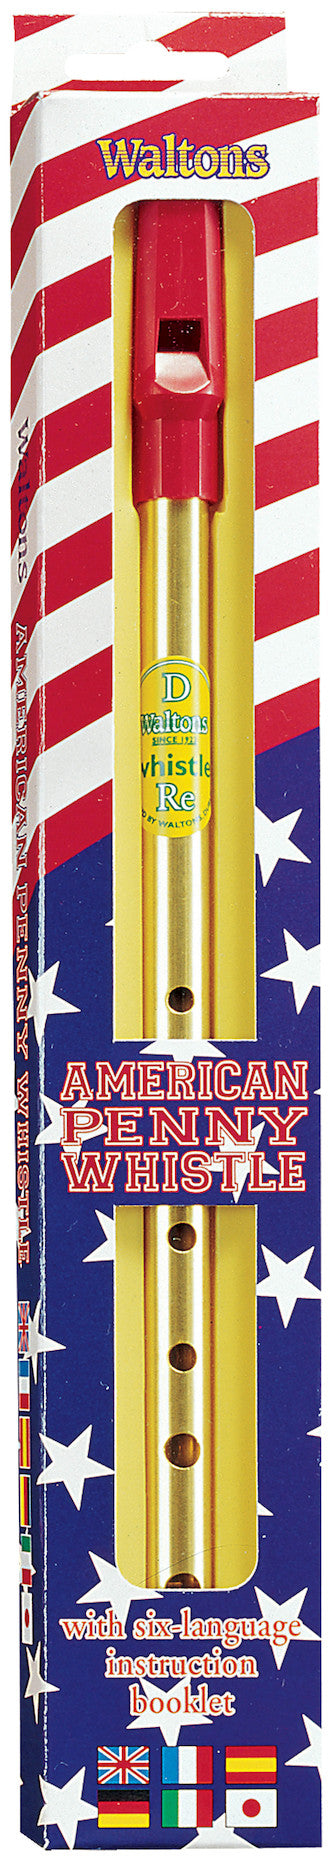 Waltons WM1534 American Penny Whistle HL00634093